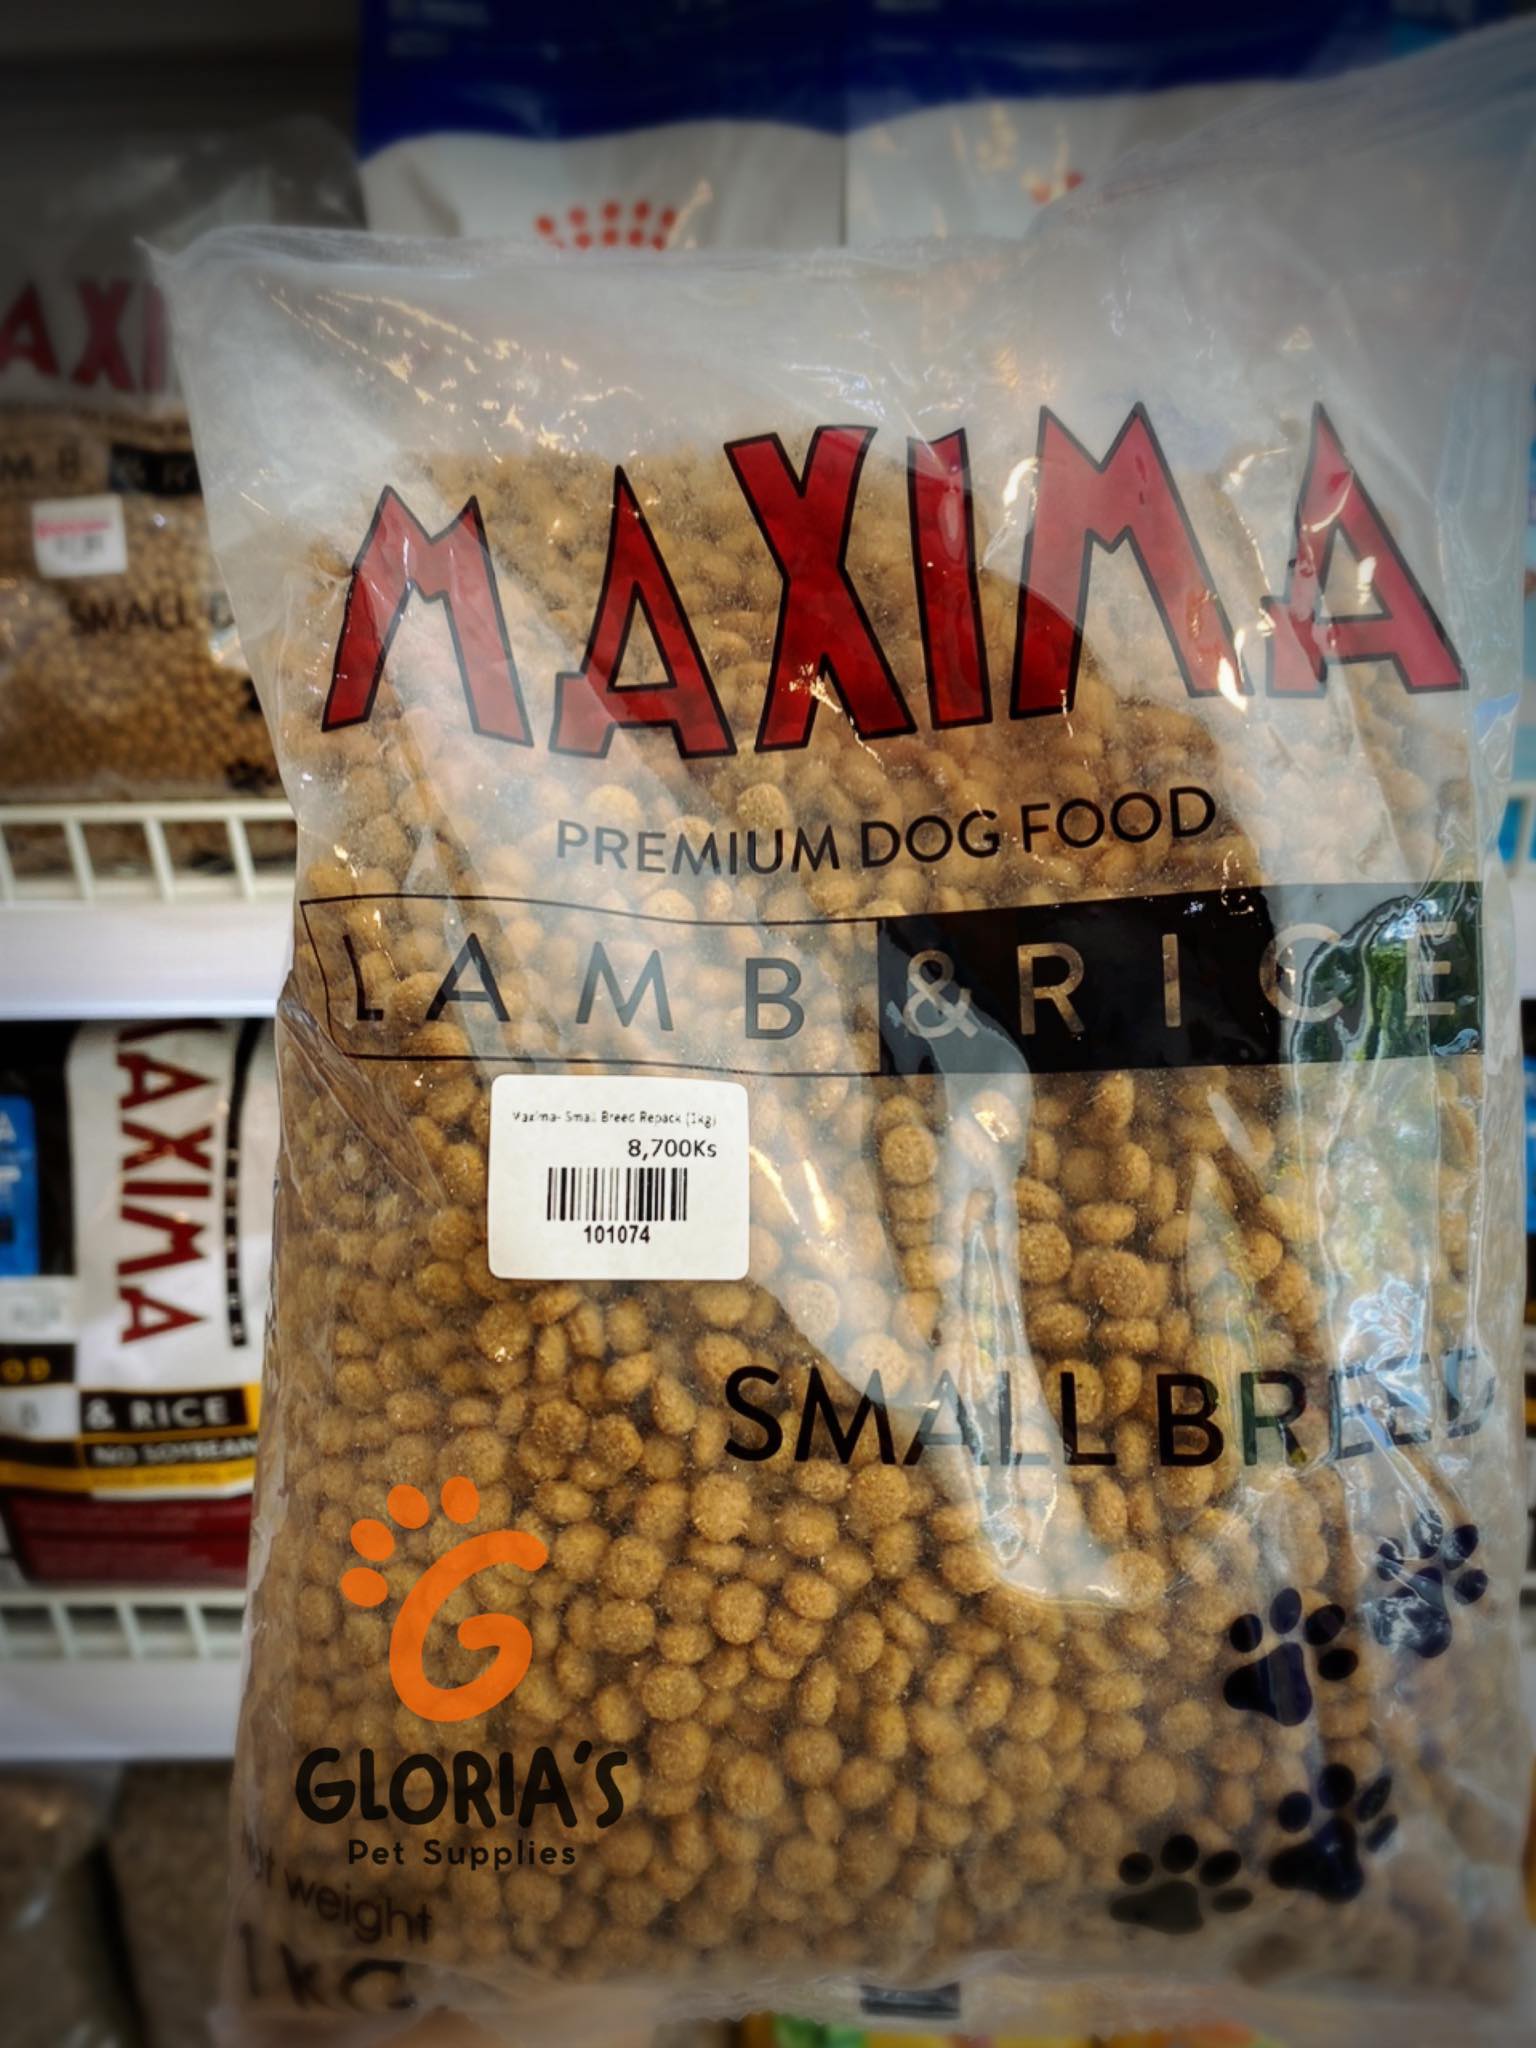 Maxima- Small Breed Repack (1kg)